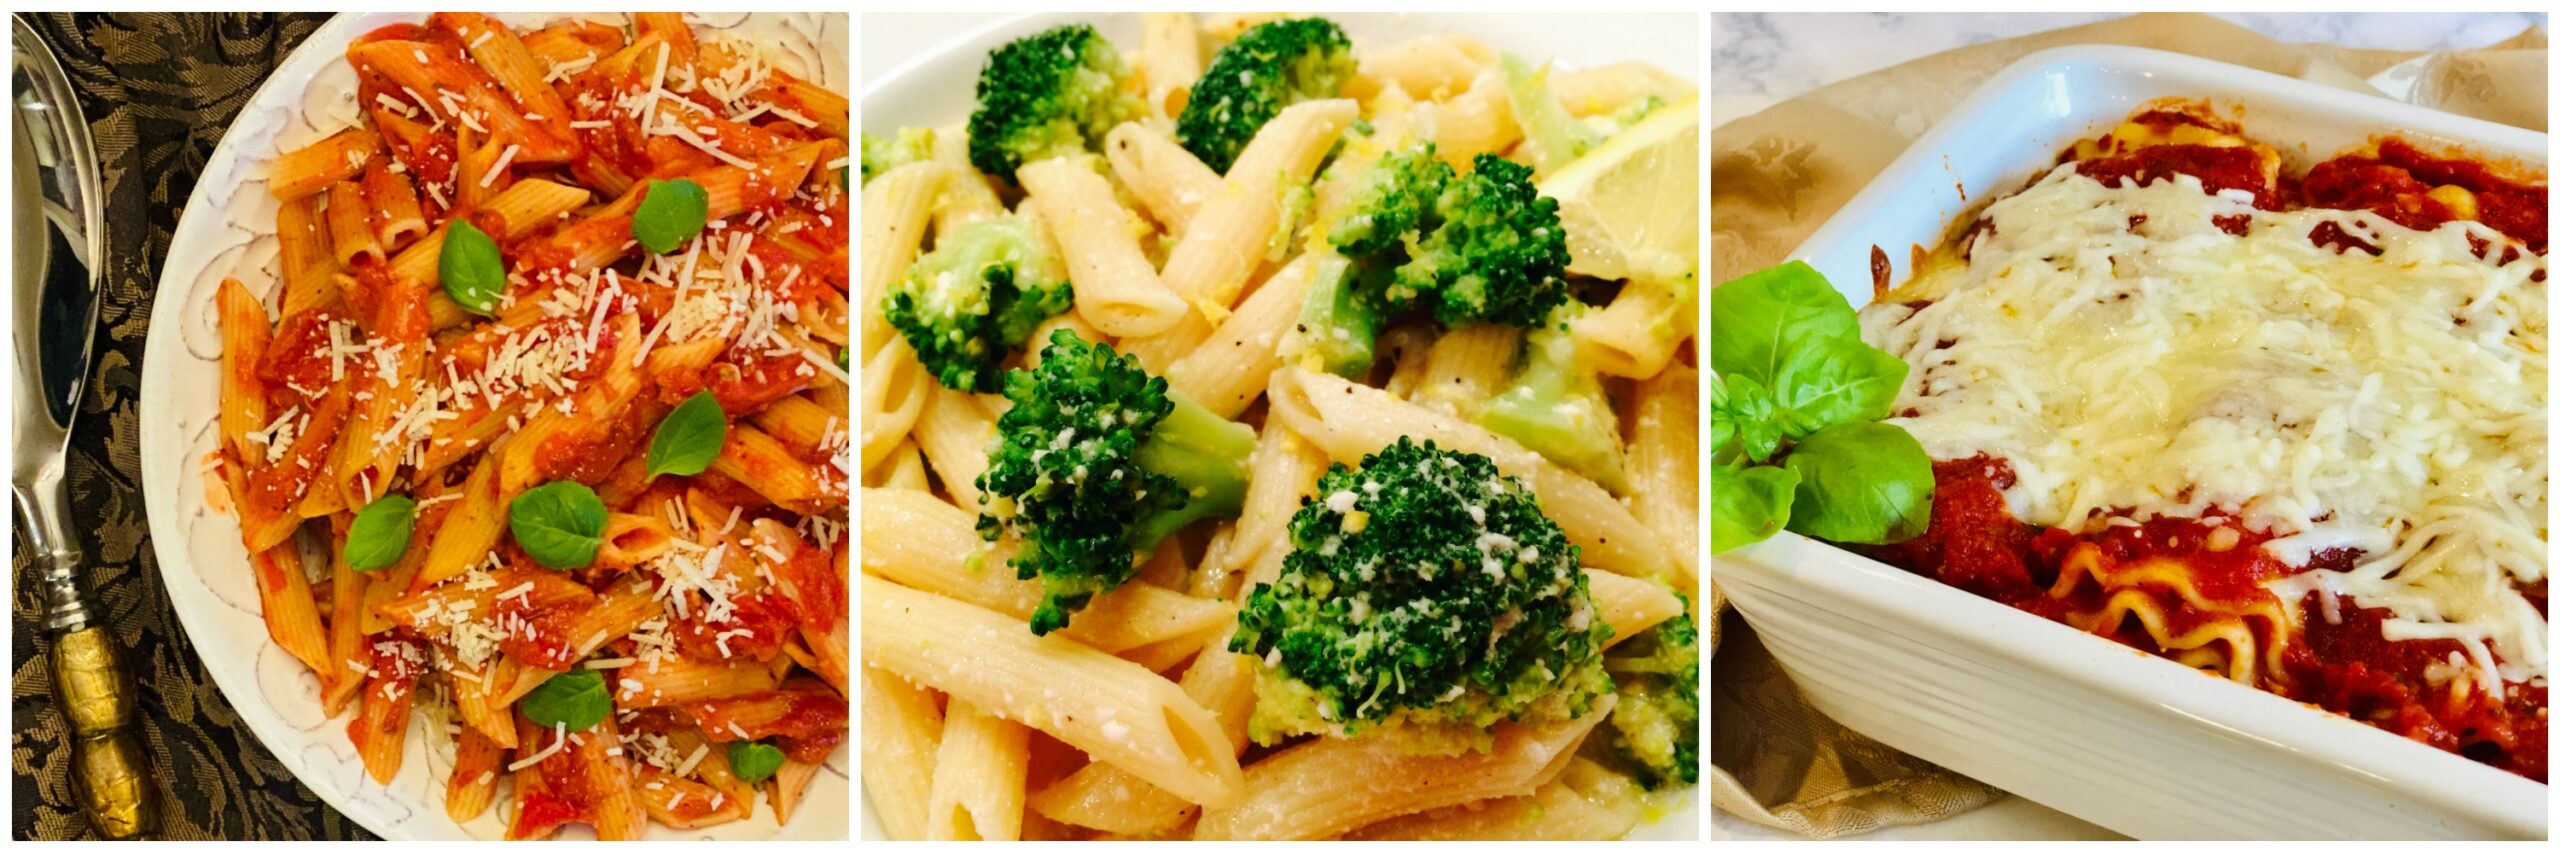 Left to right: Penne Pasta; Broccoli Pasta; Lasagna Roll Ups